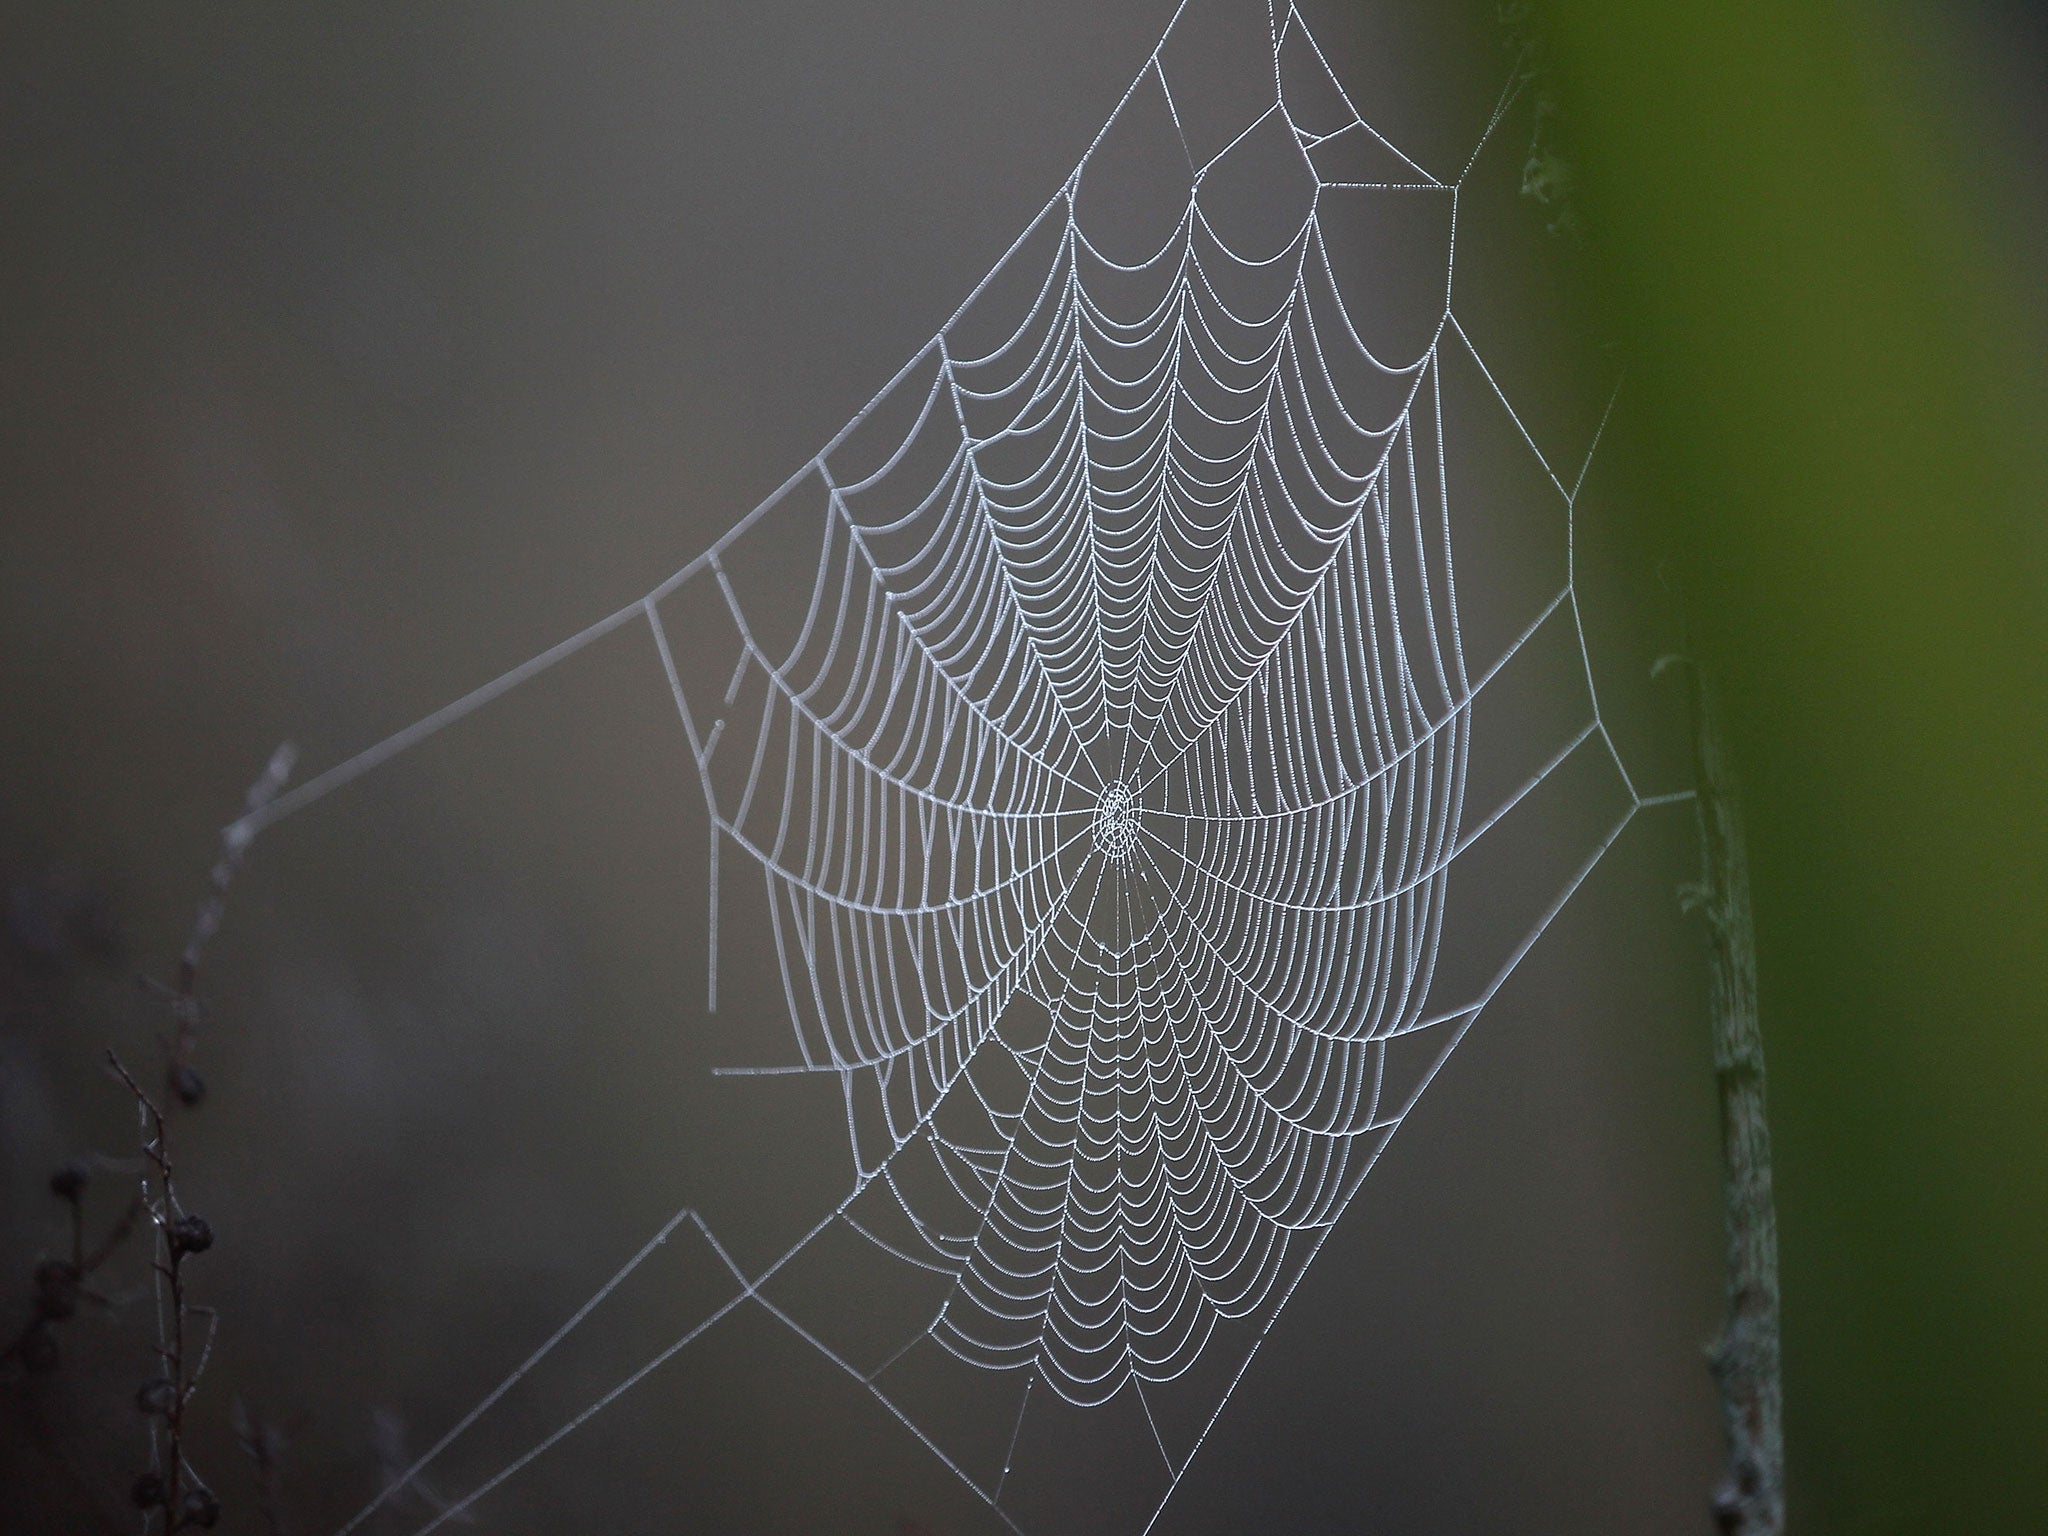 false black widow web